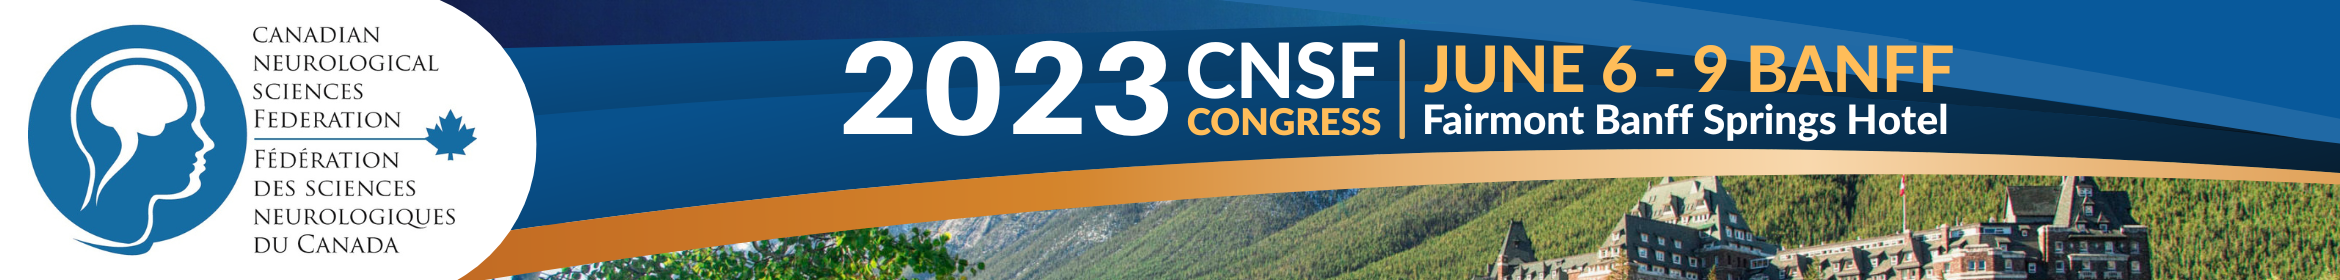 2023 CNSF Congress Main banner